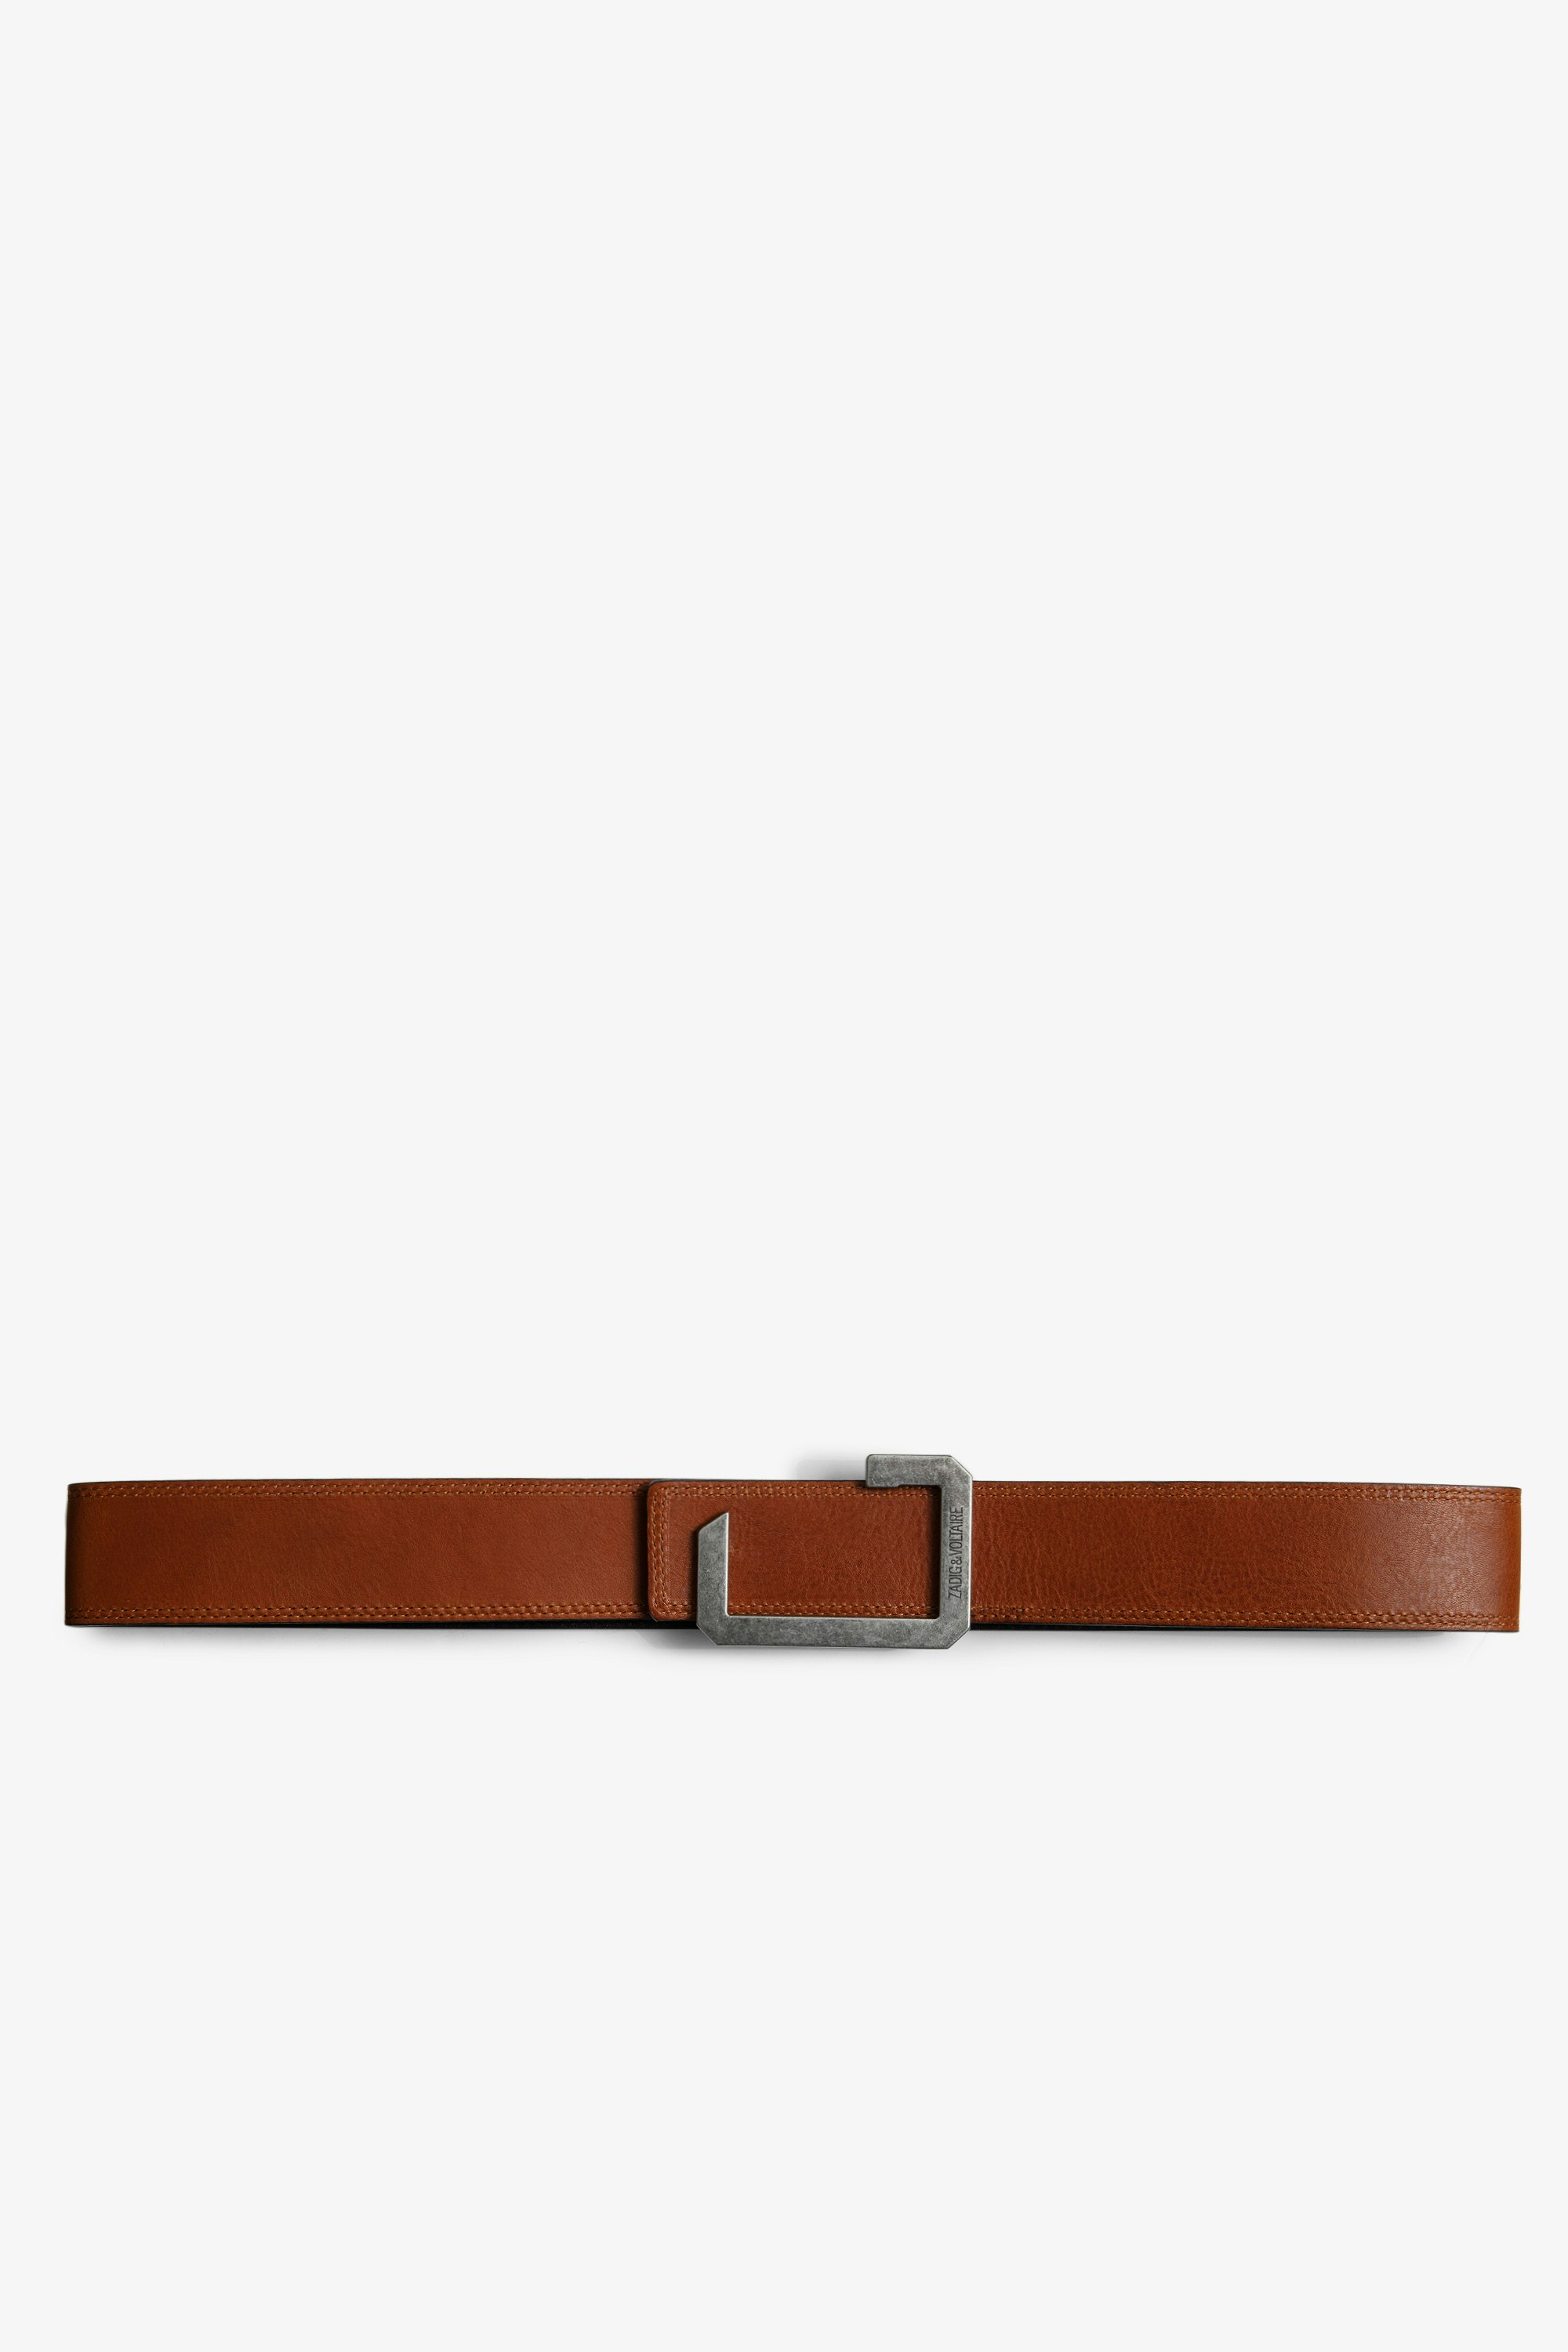 The Reversible レザーベルト Men's reversible cognac leather belt